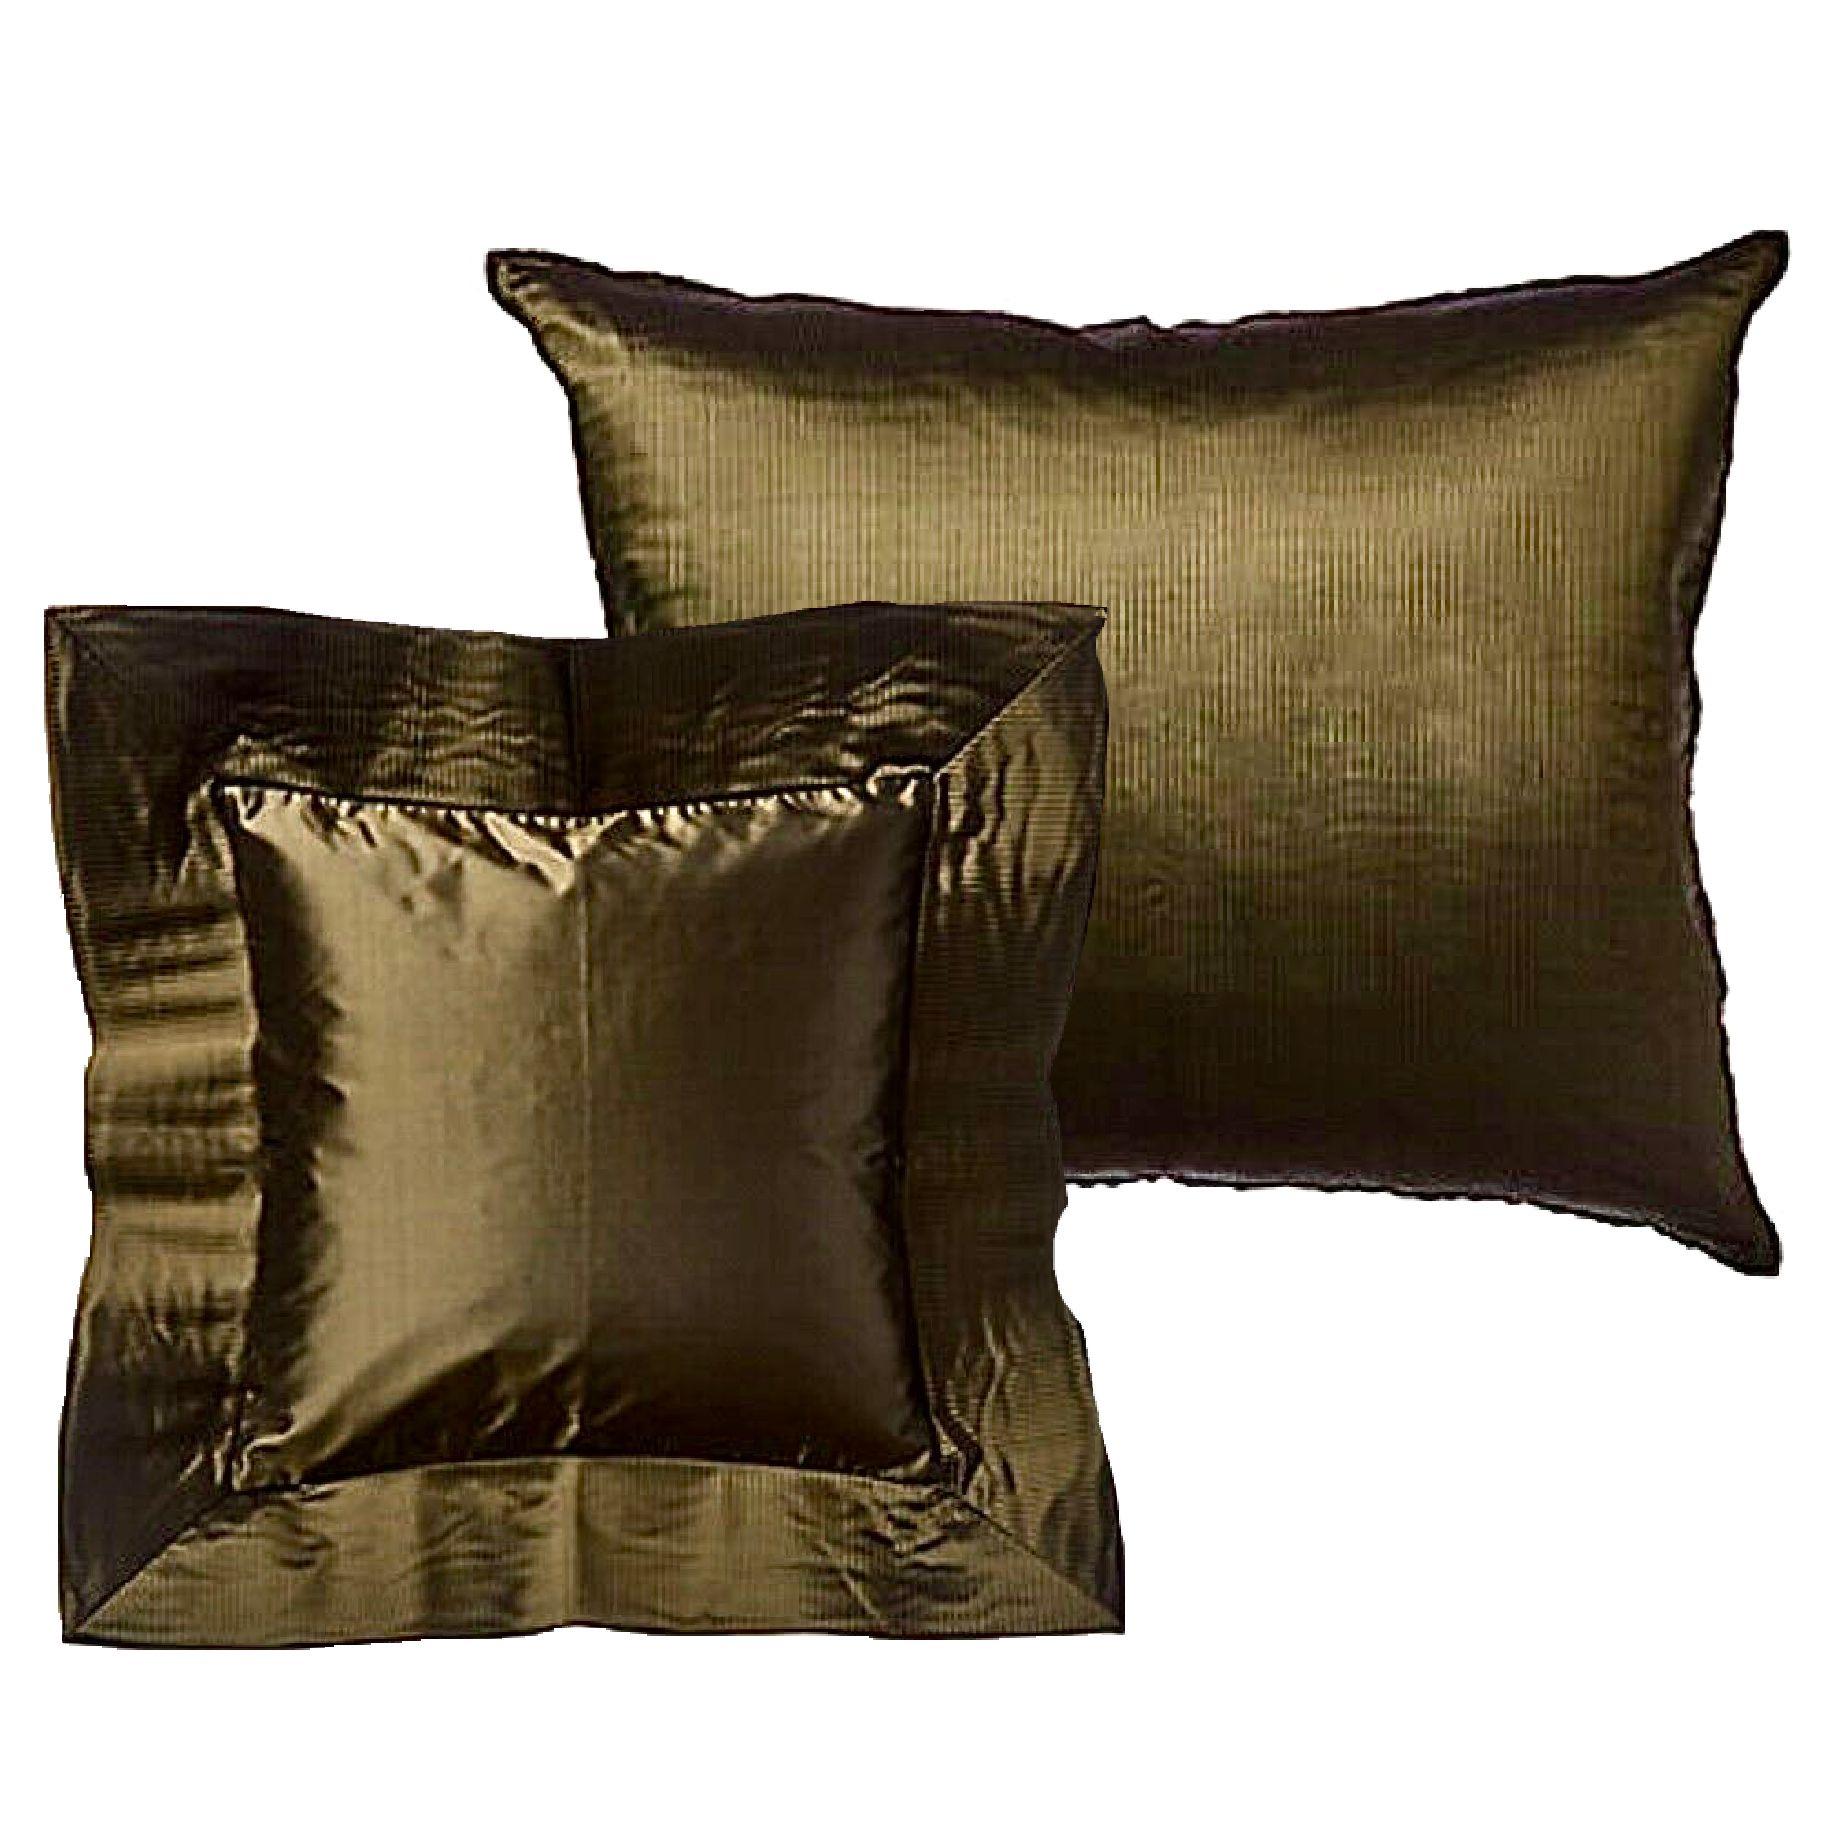 Rich Bronze Origami Pleated Silk Pillow Sham Pair, Square and Rectangular, Zip